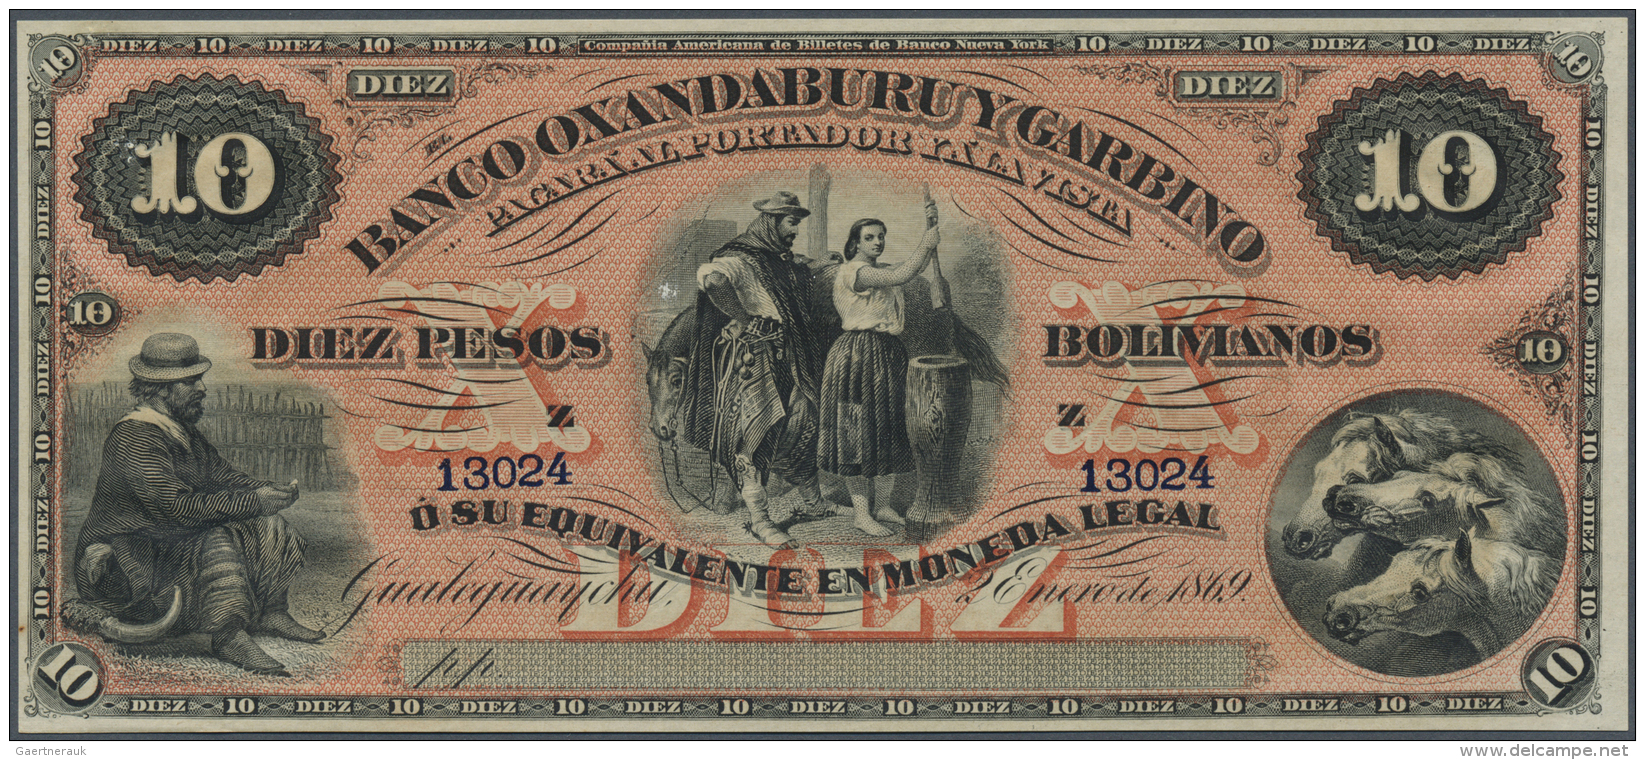 Argentina / Argentinien:  Banco Oxandaburu Y Garbino 10 Bolivianos 1869 Remainder Without Signature In Perfect Condition - Argentina